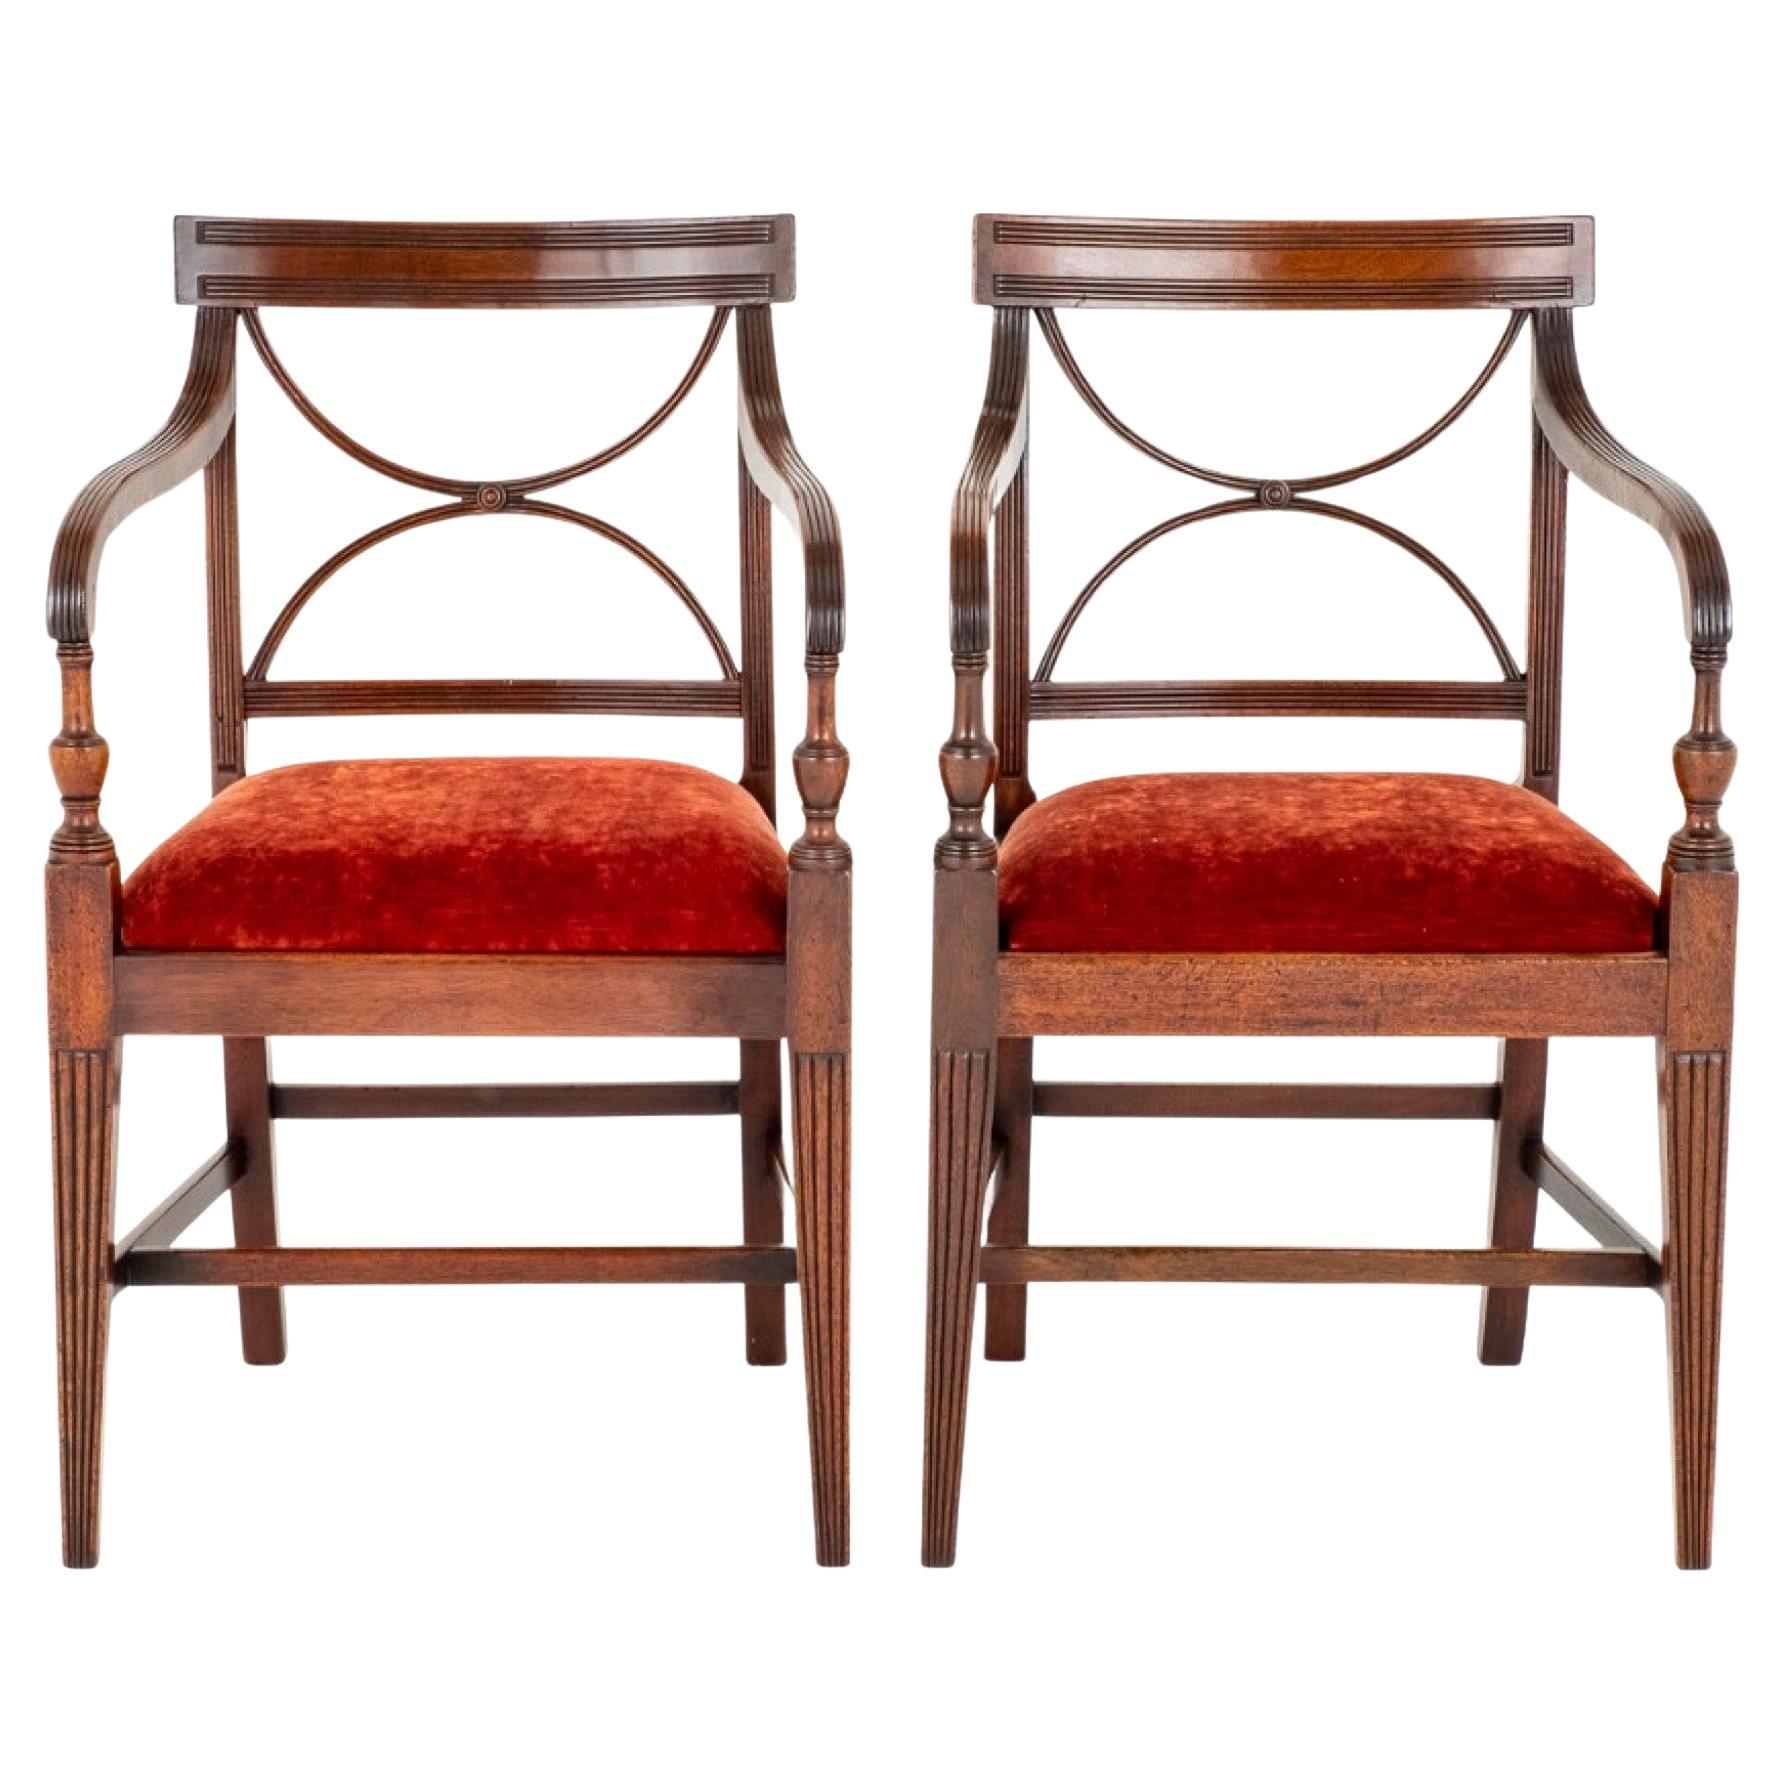 Pair Regency Arm Chairs Period Mahogany Antique